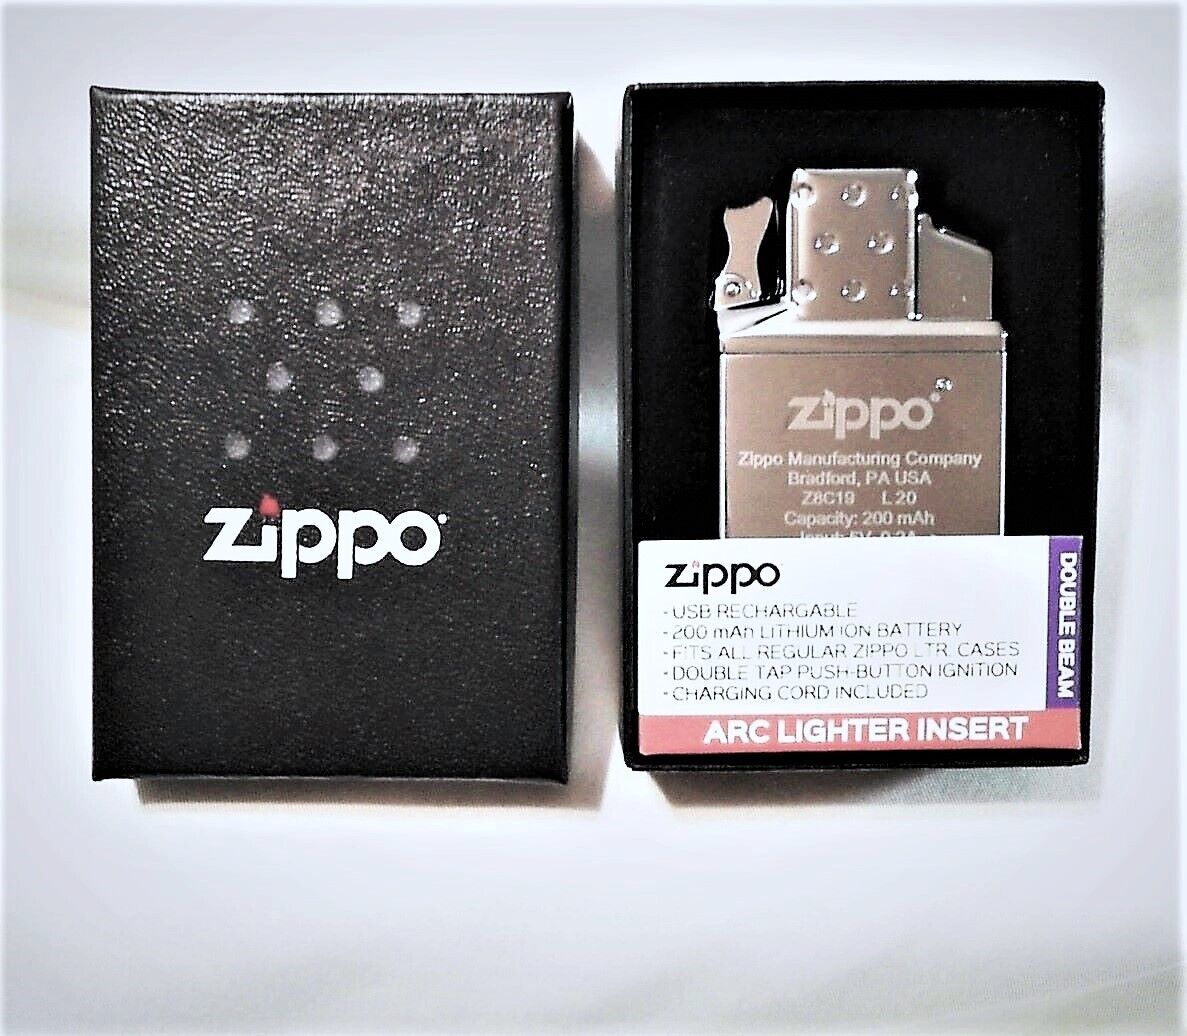 Zippo Arc Lighter Rechargeable Insert #Z8C19 rA